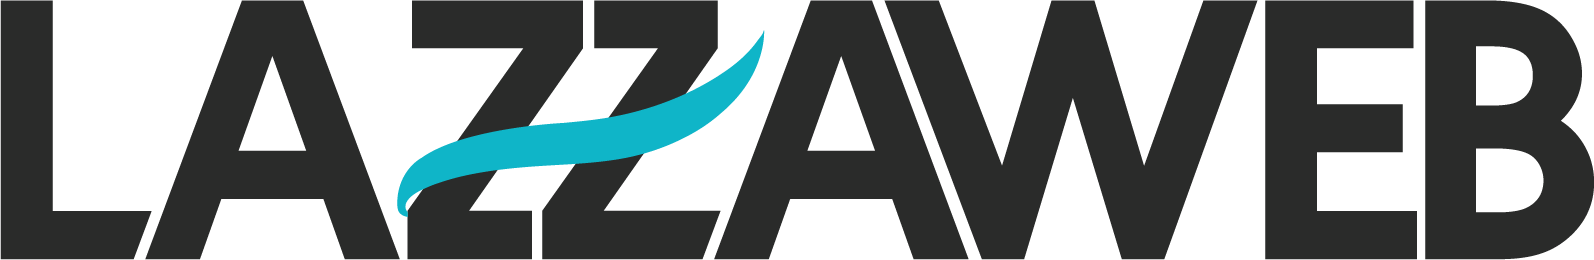 lazzaweb-logo